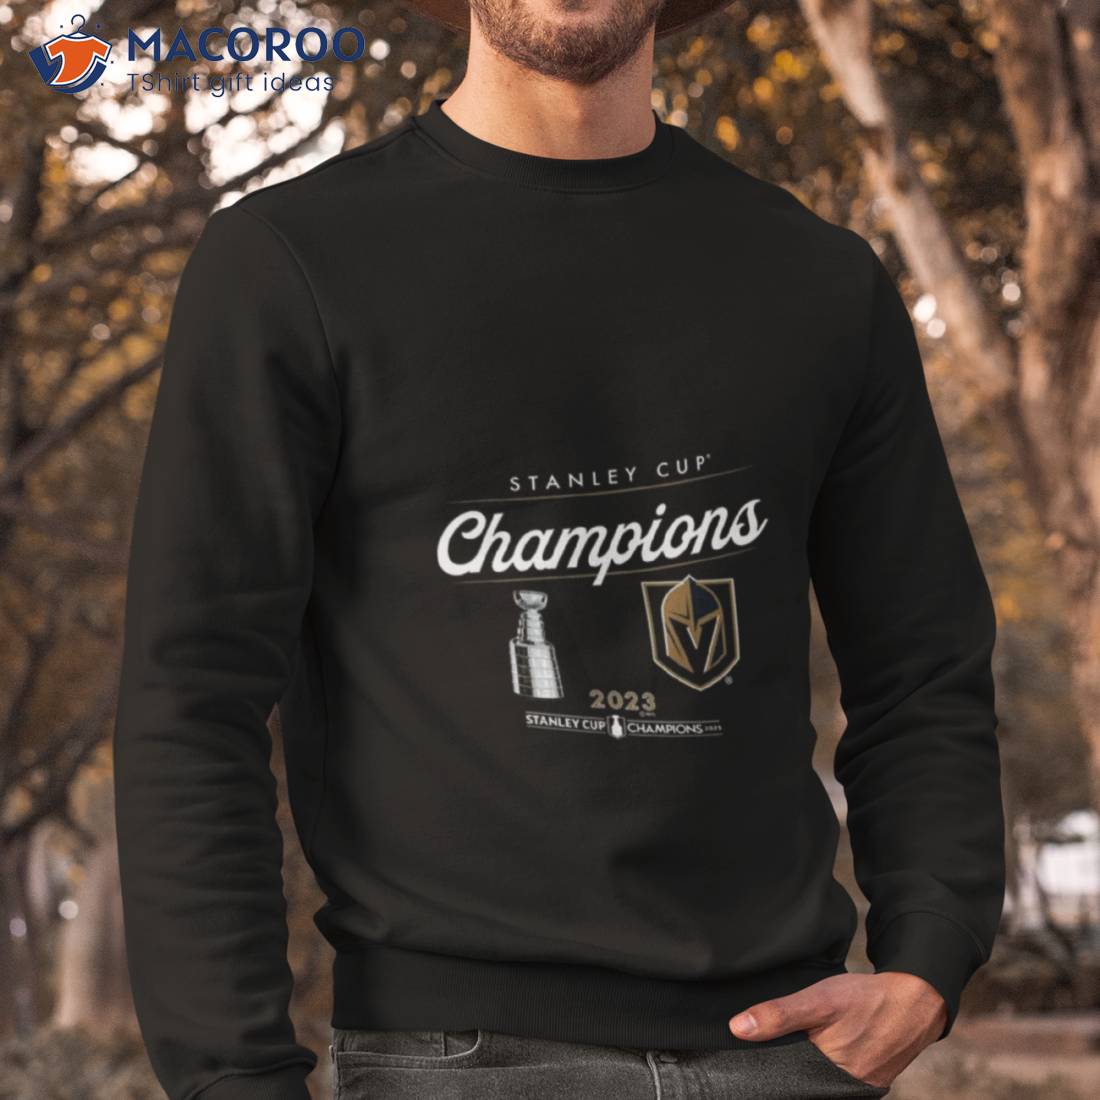 https://images.macoroo.com/wp-content/uploads/2023/06/stanley-cup-champs-2023-logo-vegas-golden-knights-shirt-sweatshirt.jpg